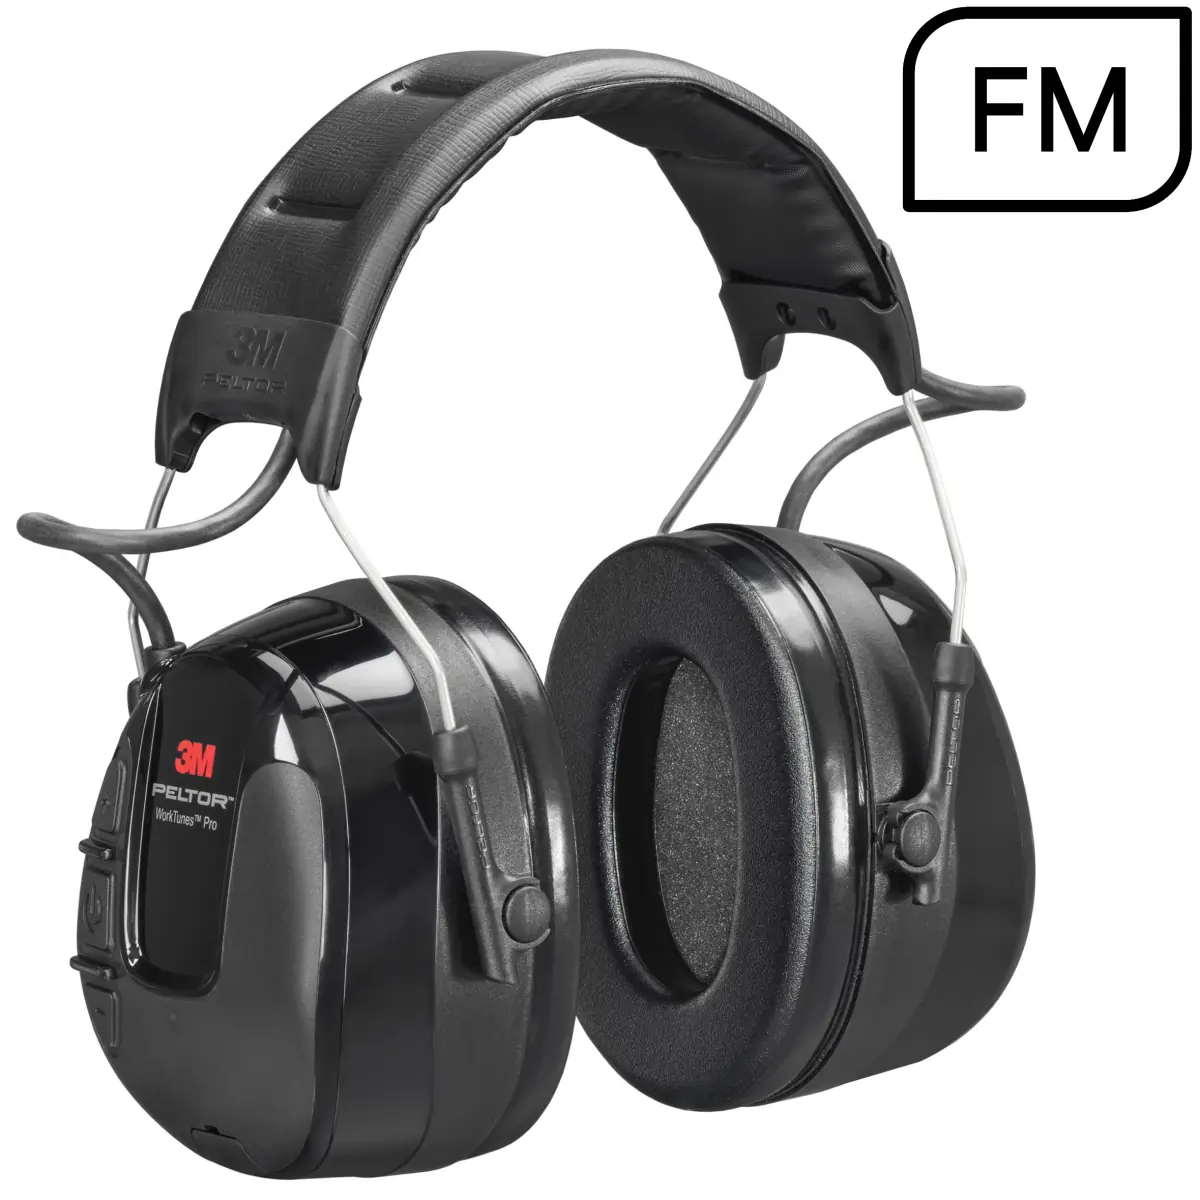 3M Peltor WorkTunes Pro FM-radio - Oorkappen fm-radio - HRXS220A - shells met FM-radio